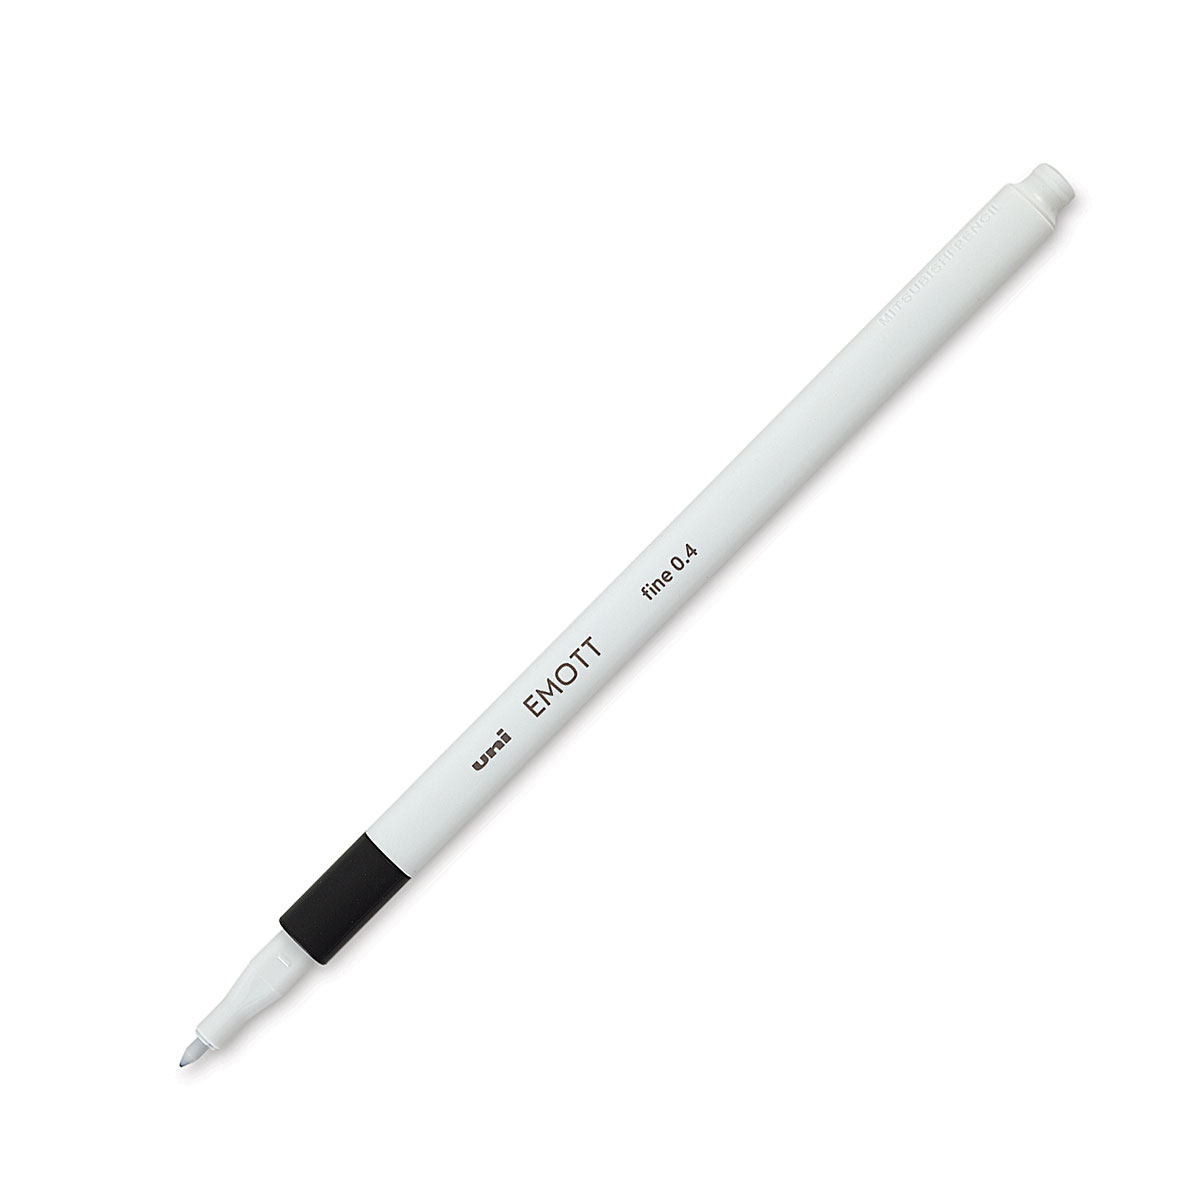 Emott ever fine pen sets – ARTOutfitters